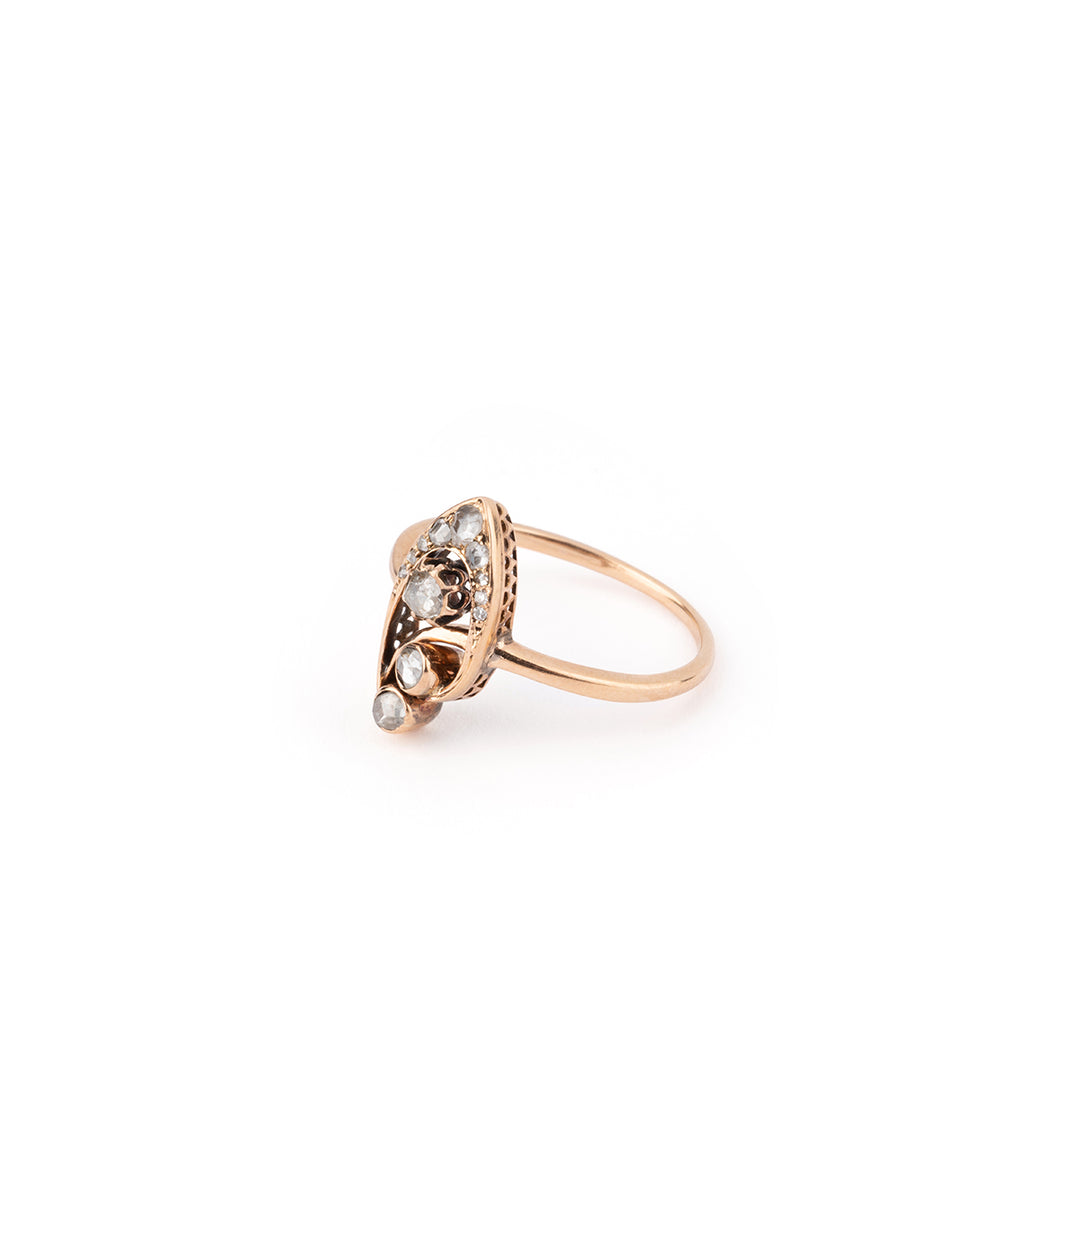 Antique ring gold and diamond "Elsu" - Caillou Paris 